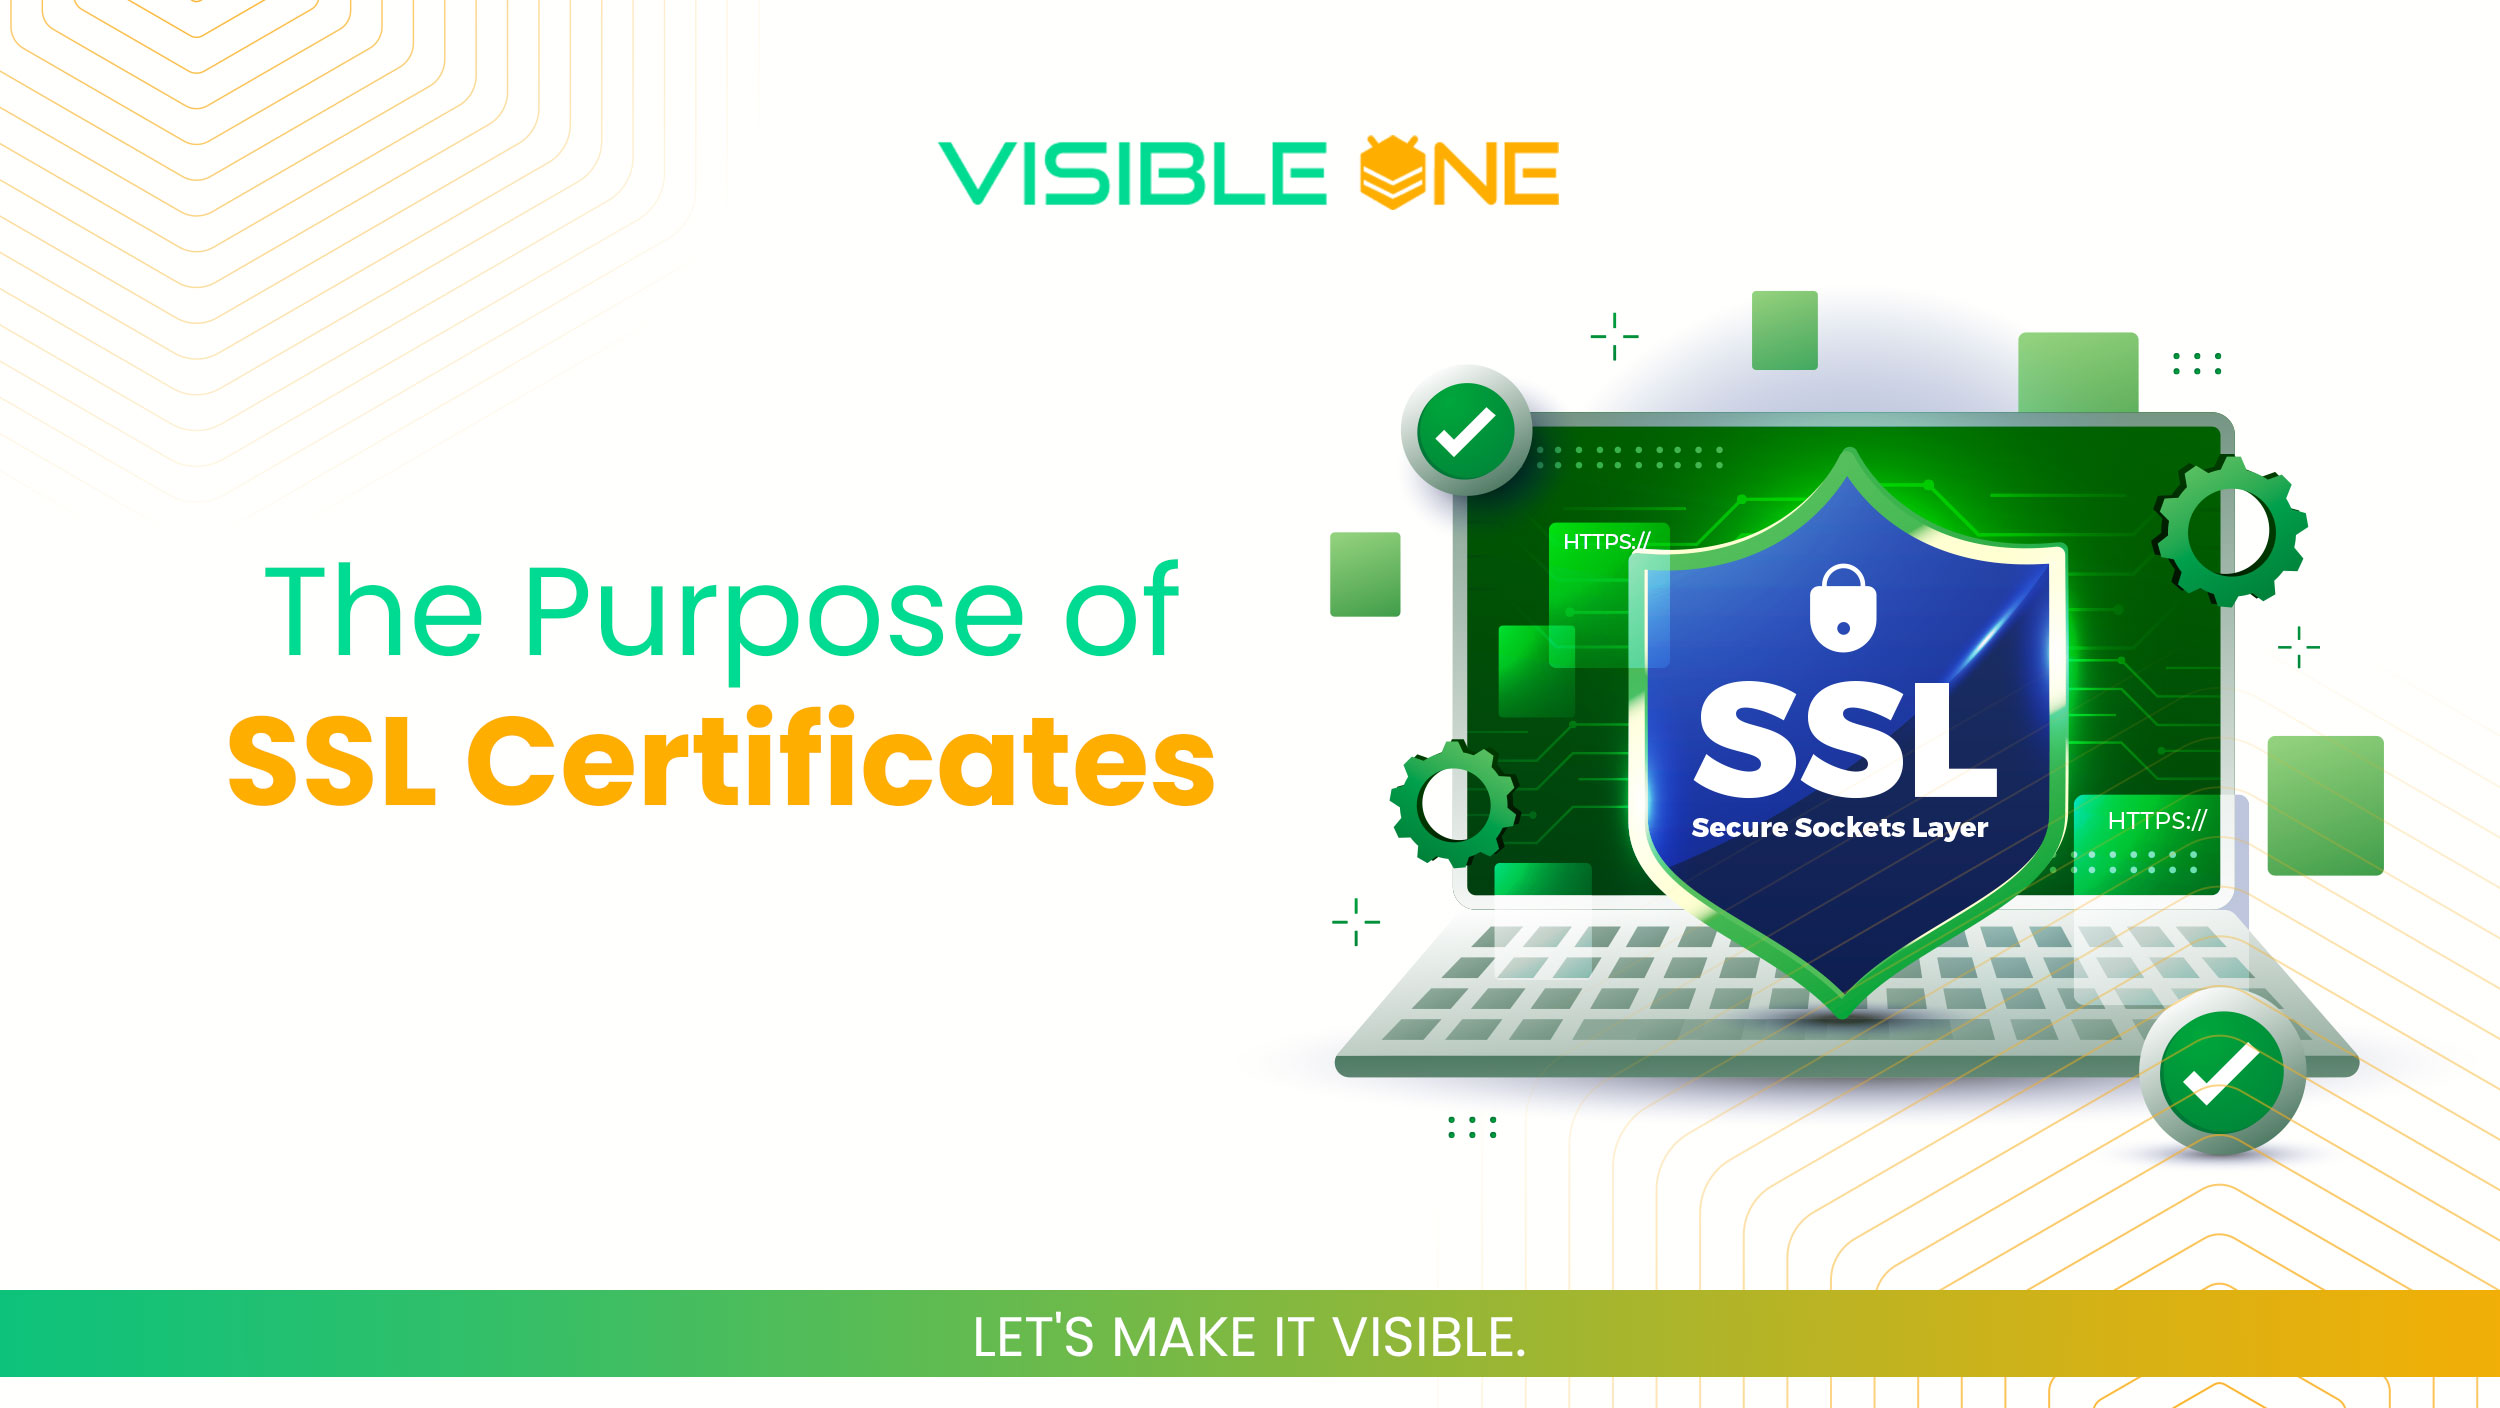 The Purpose of SSL Certificates